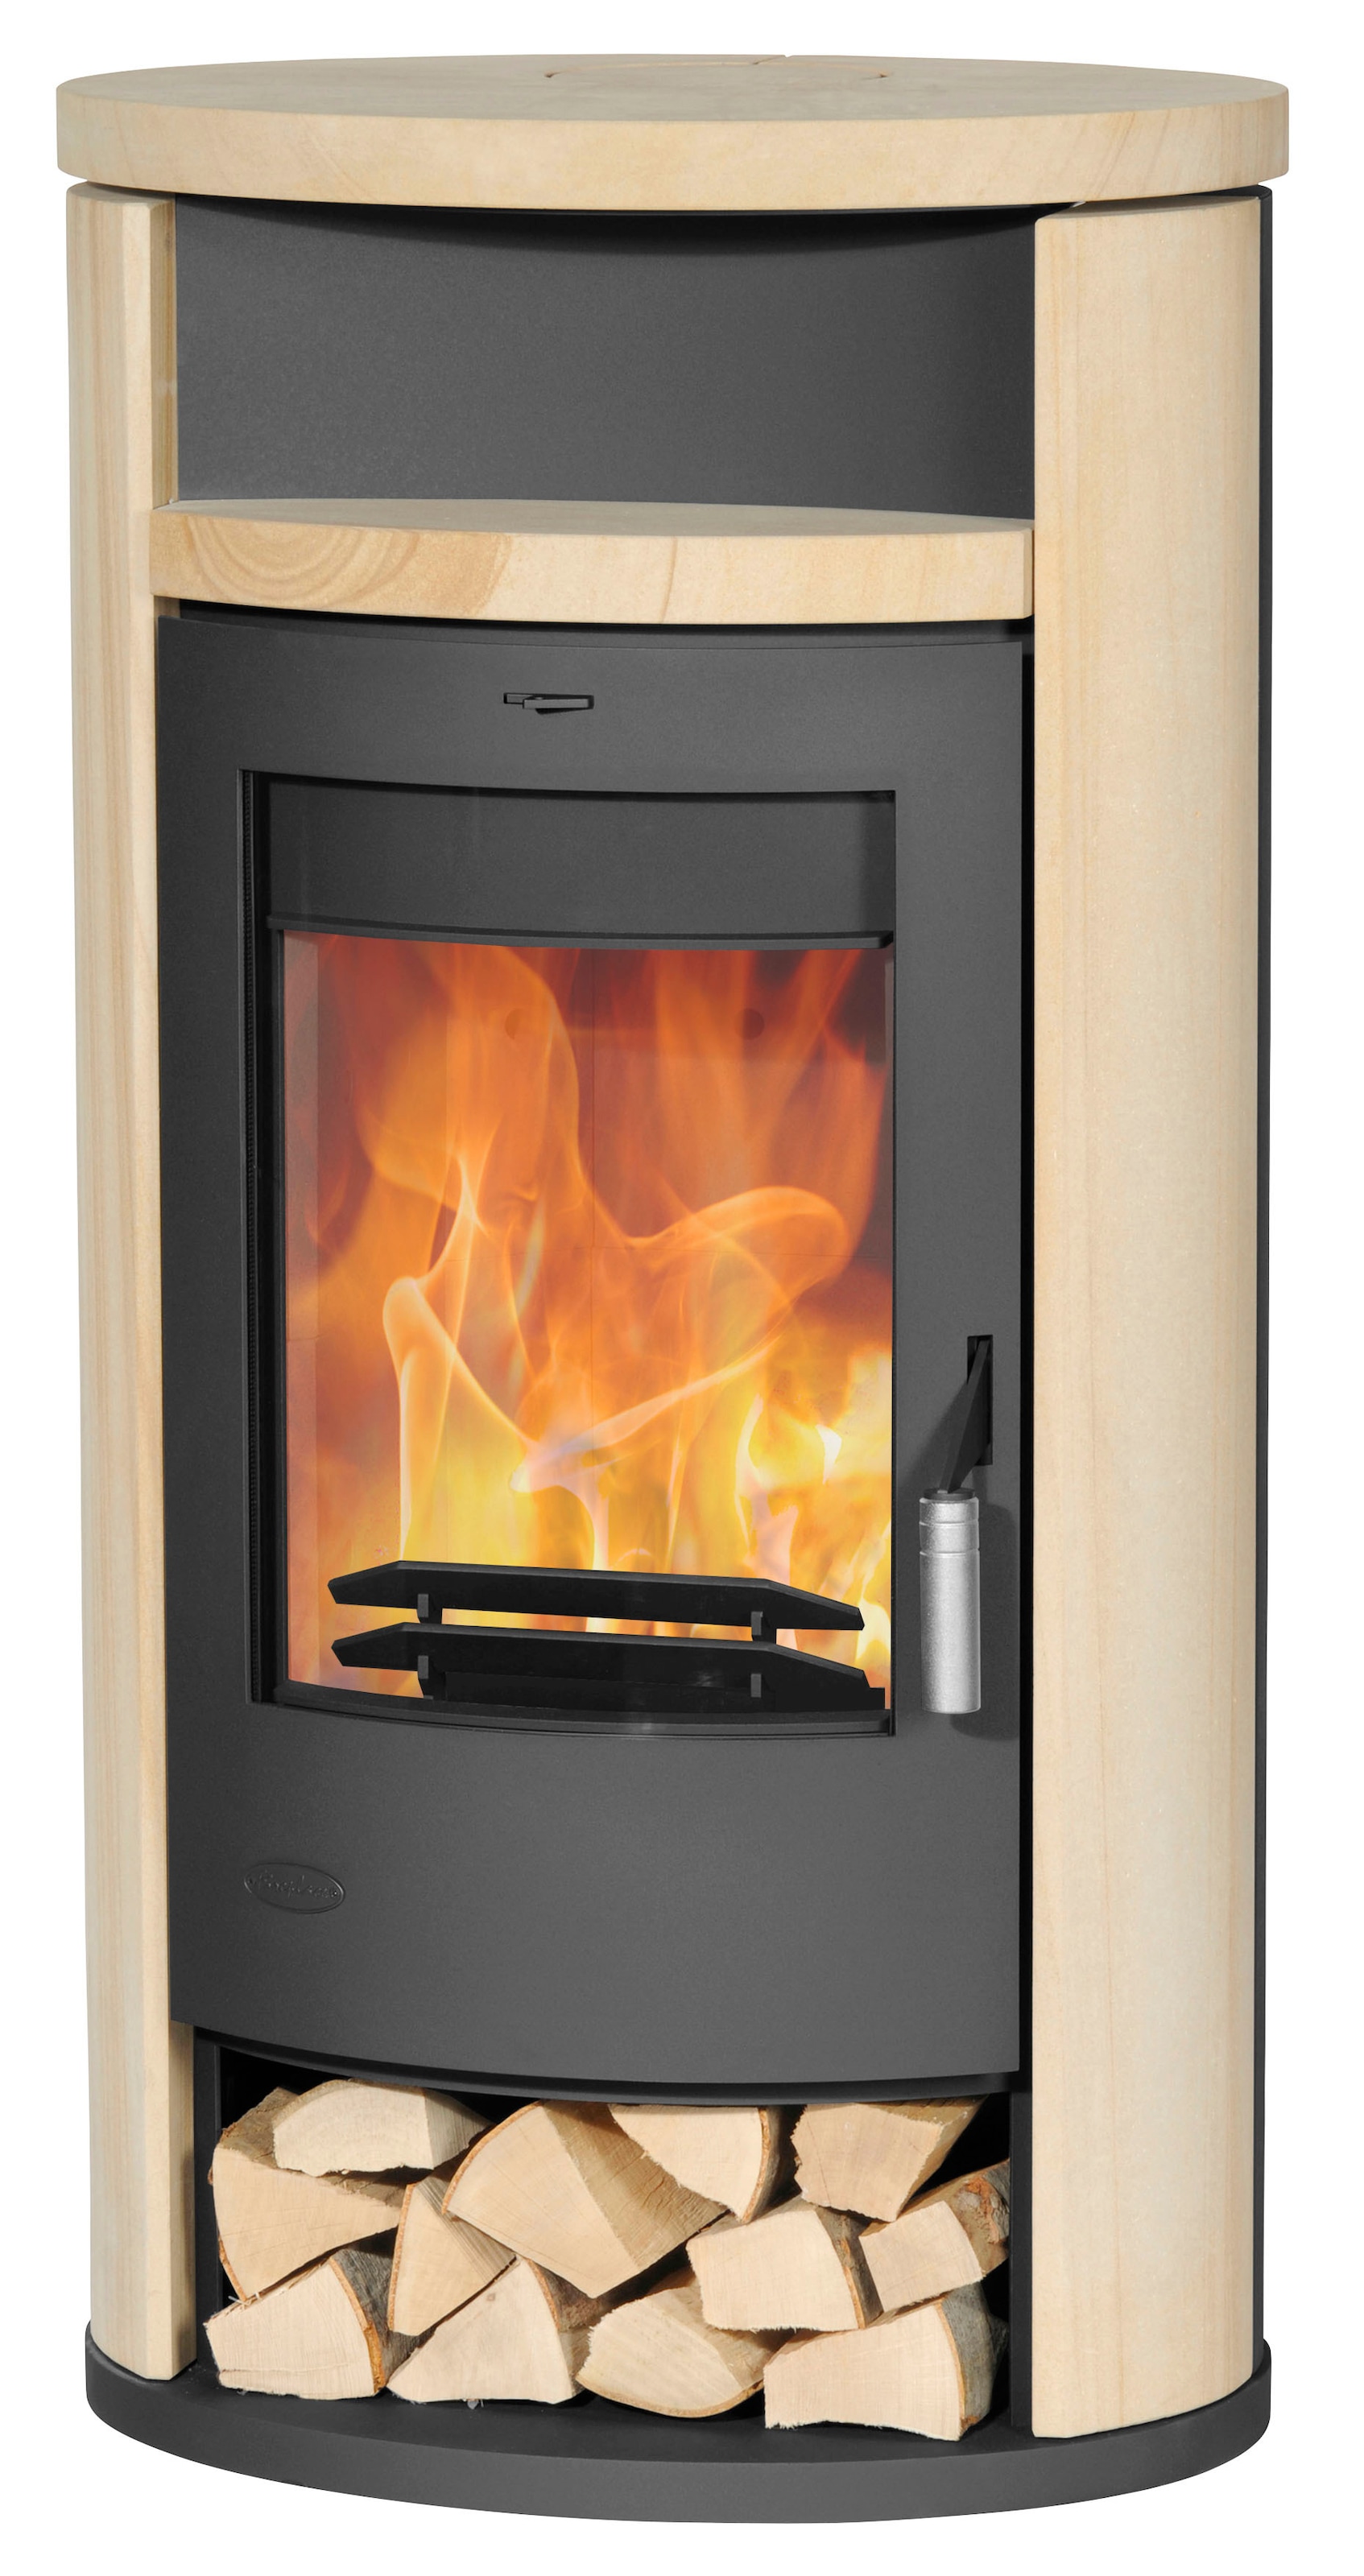 Fireplace Kaminofen »Alicante Loticstone«, Gewicht 165 H/B/T: 1136mm/595mm/469mm kg, online bestellen